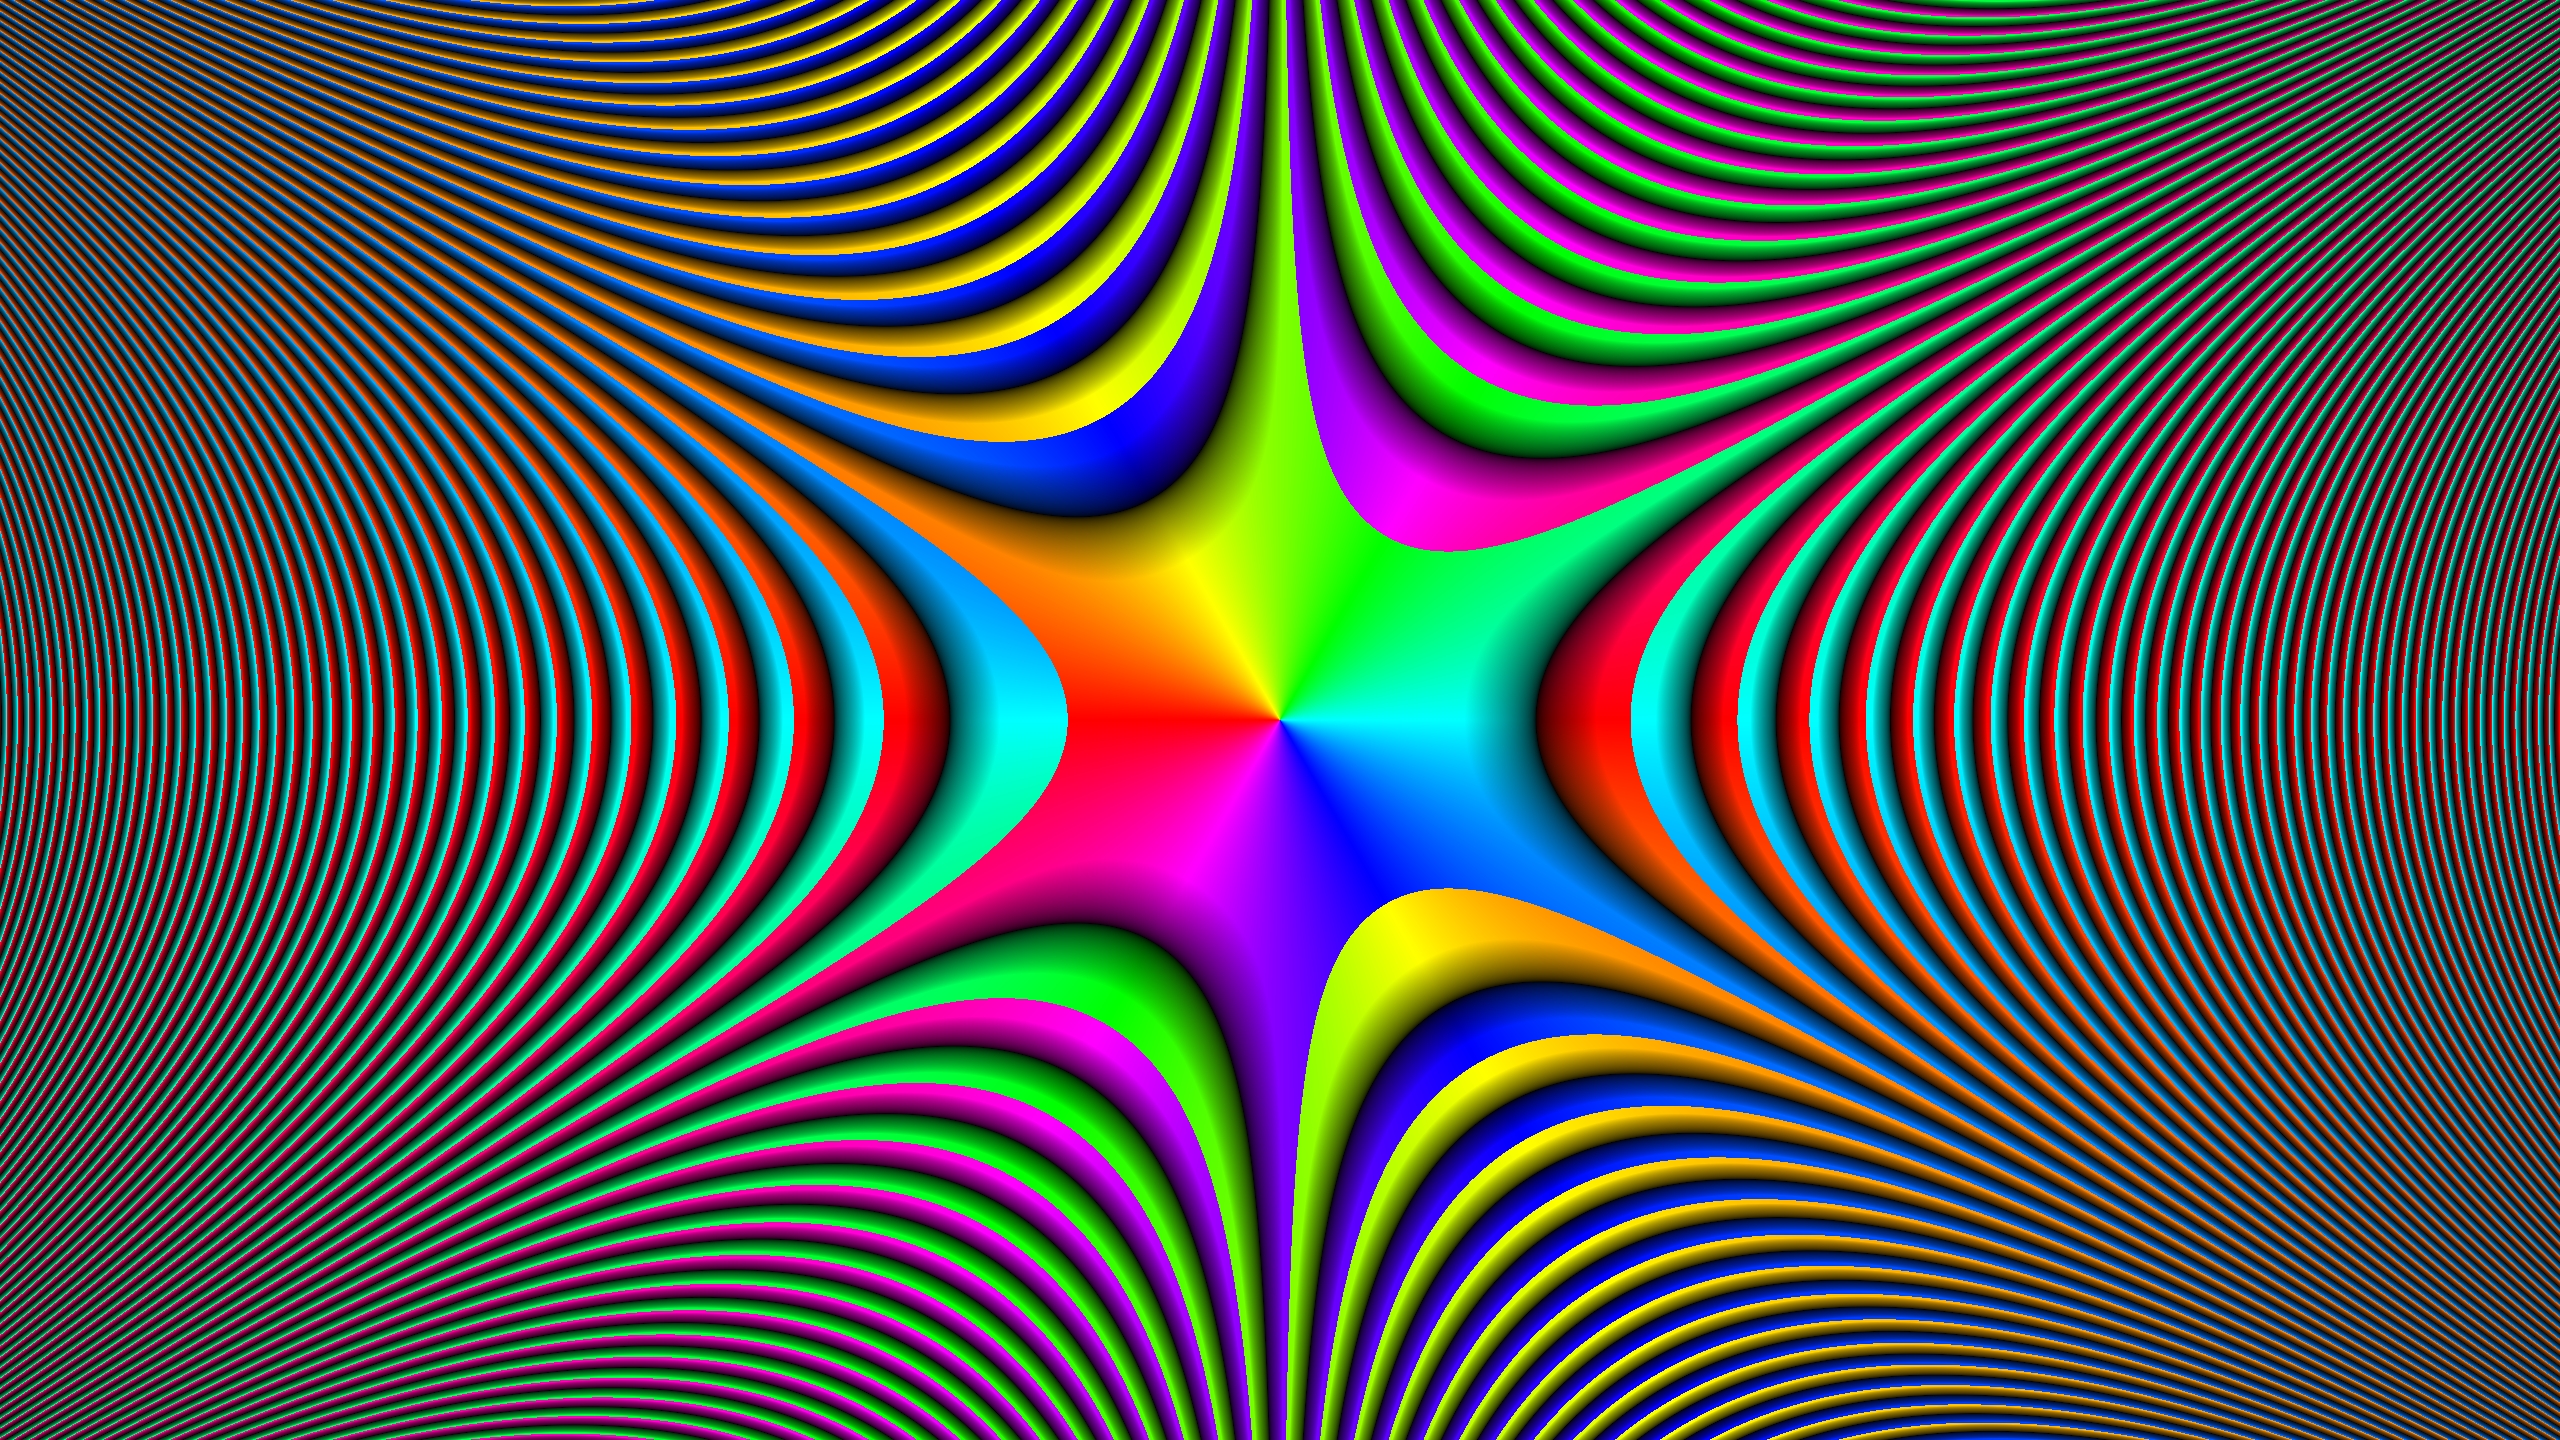 Illusion Wallpaper Pc Hz4wi37 4usky